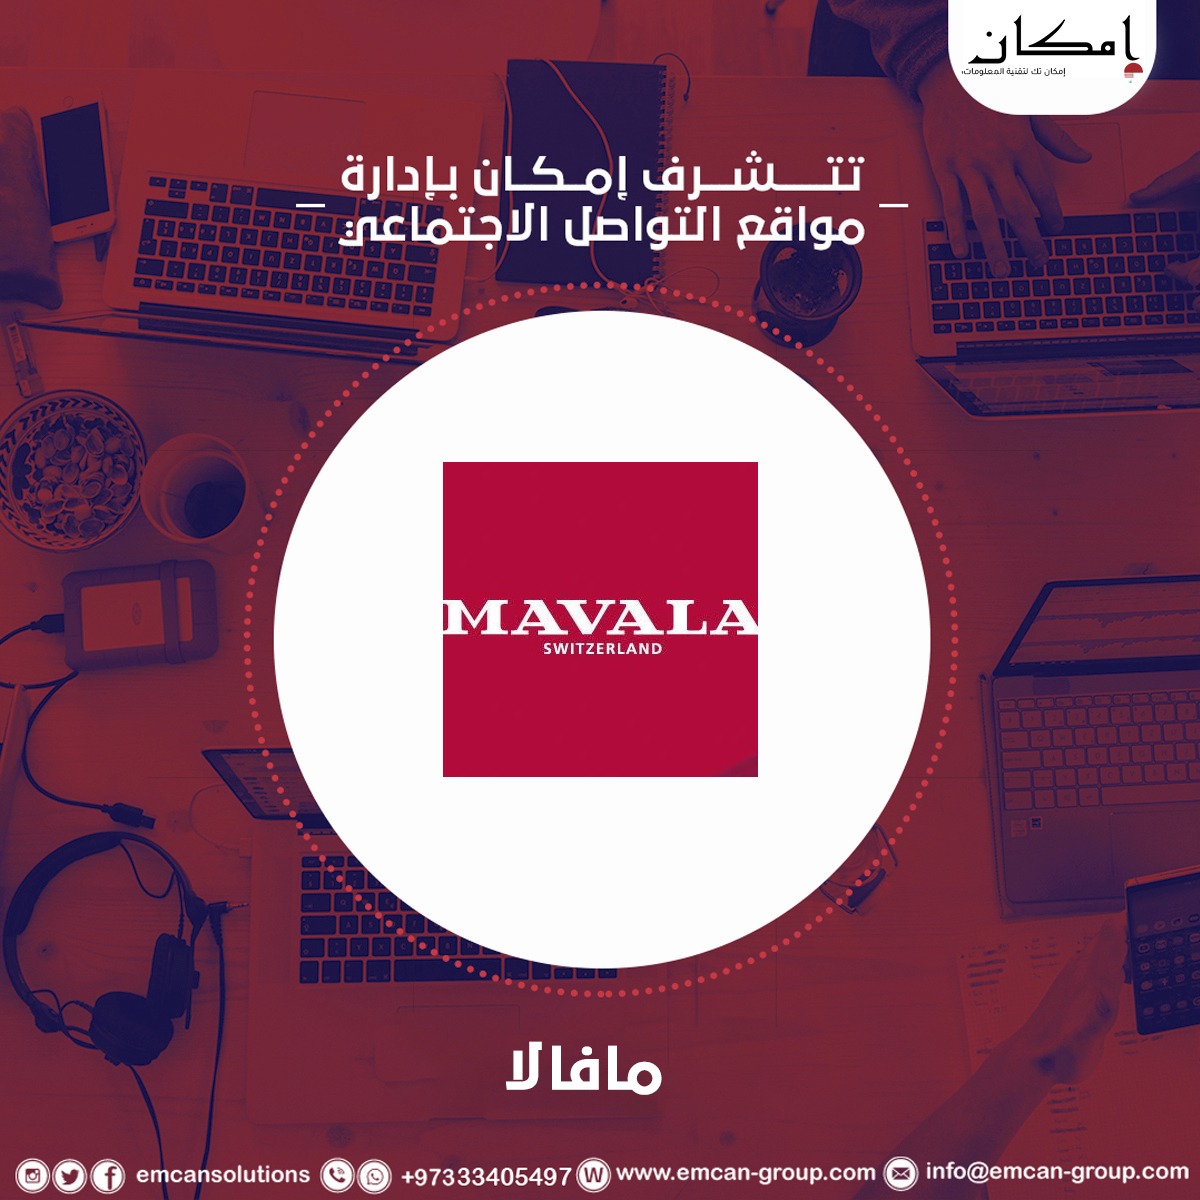 Social media management for Mavala